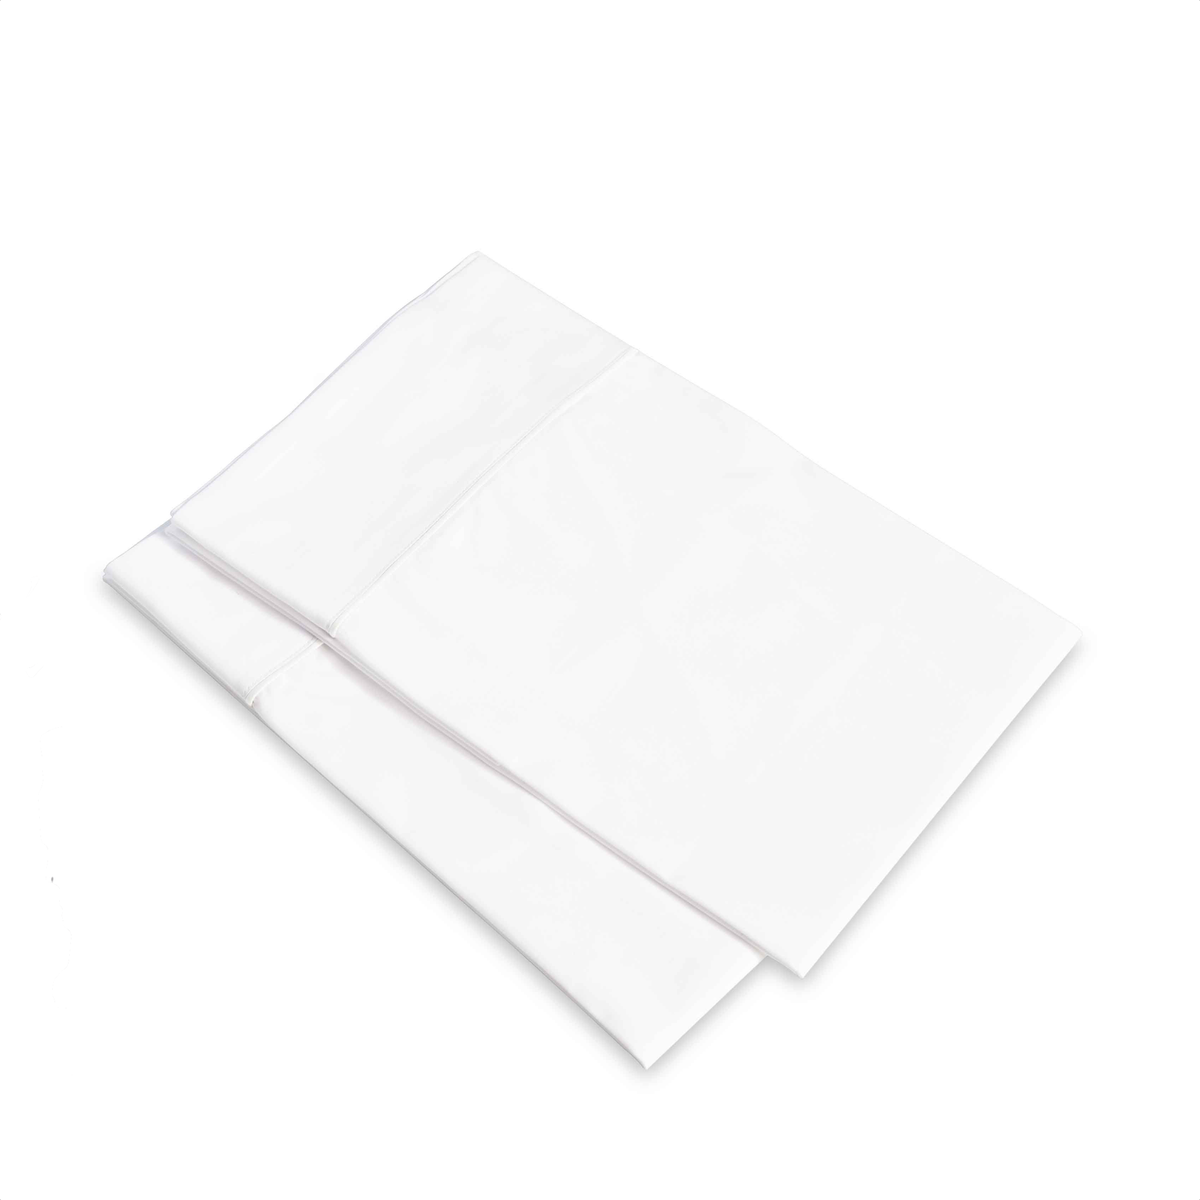 Folded Silos of Signoria Luce Bedding Pillowcases in White Color